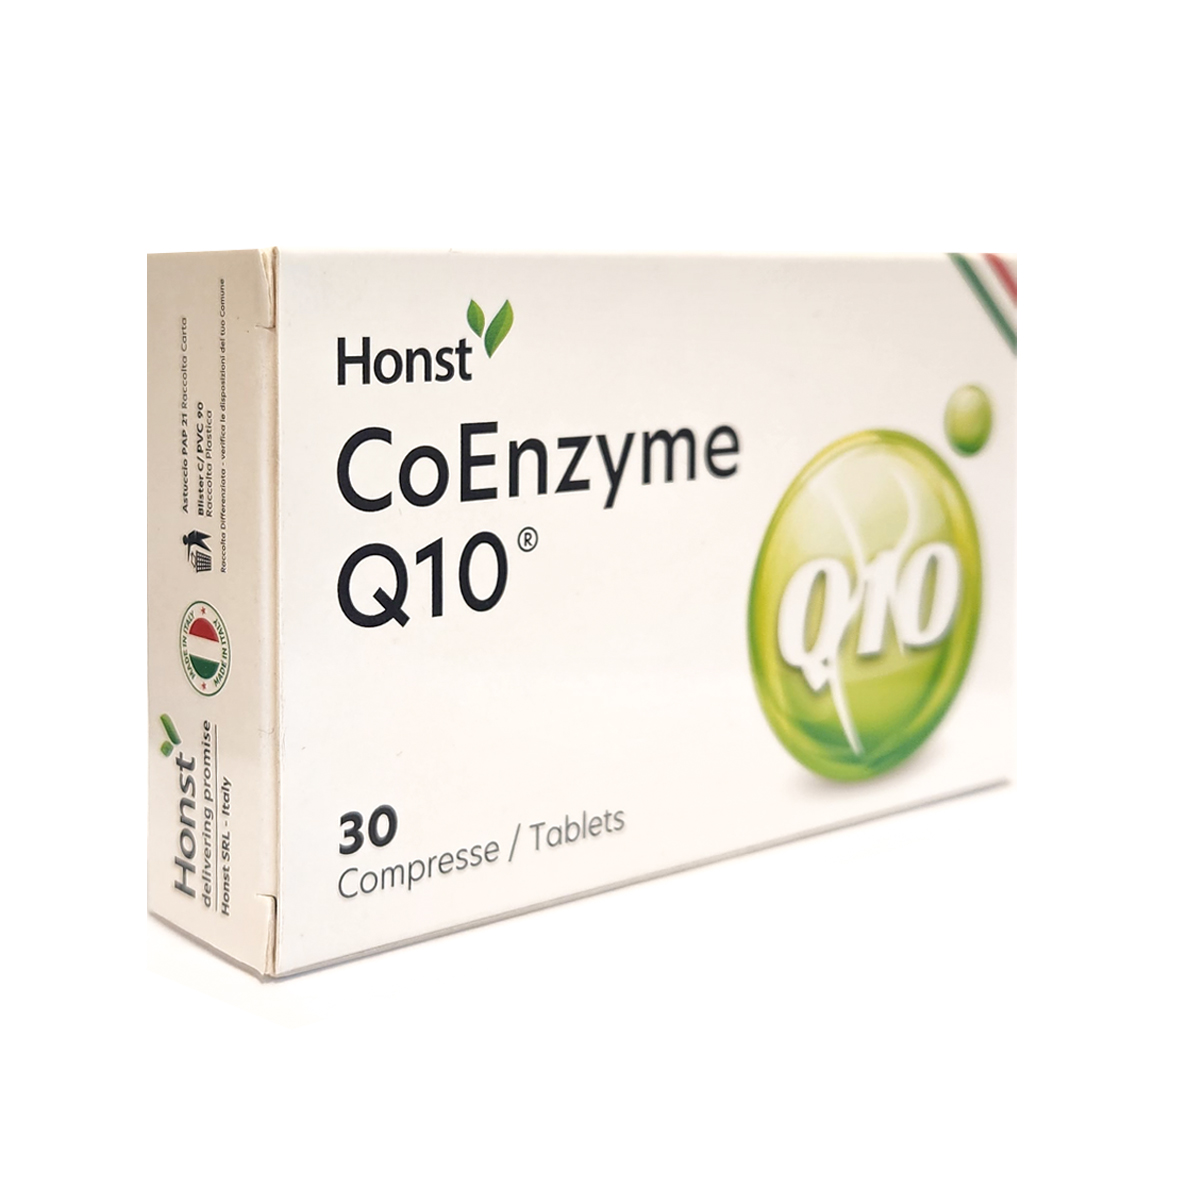 Honst-CoEnzyme Q10 30 Compresse /Tablets